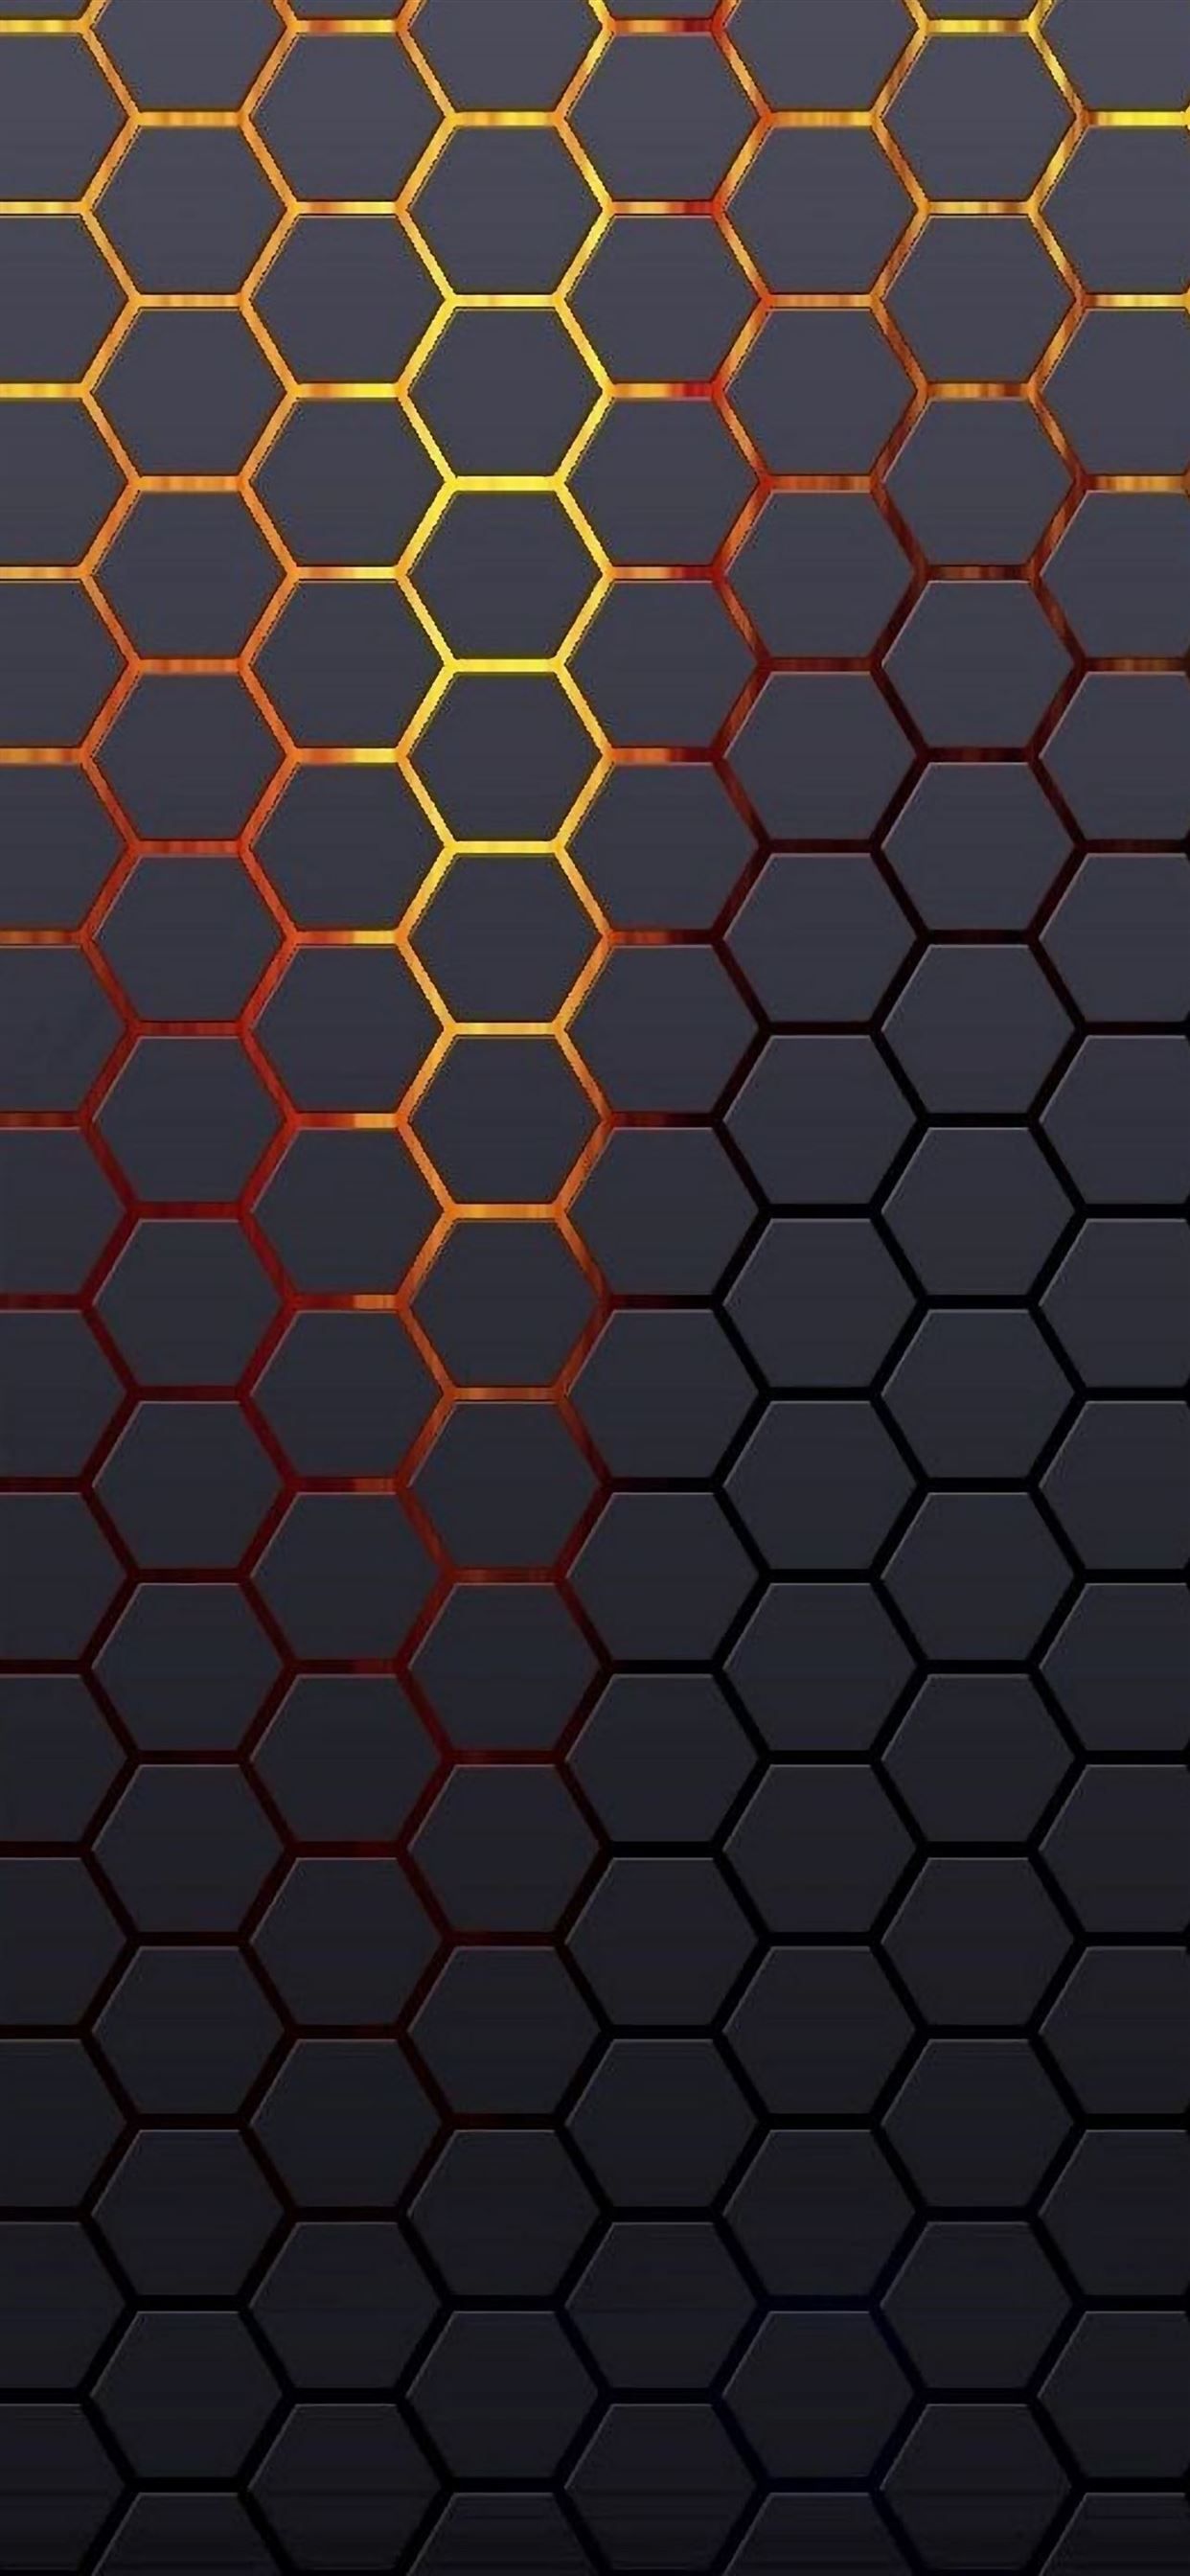 Hexagonal Grid Background iPhone Wallpaper Free Download